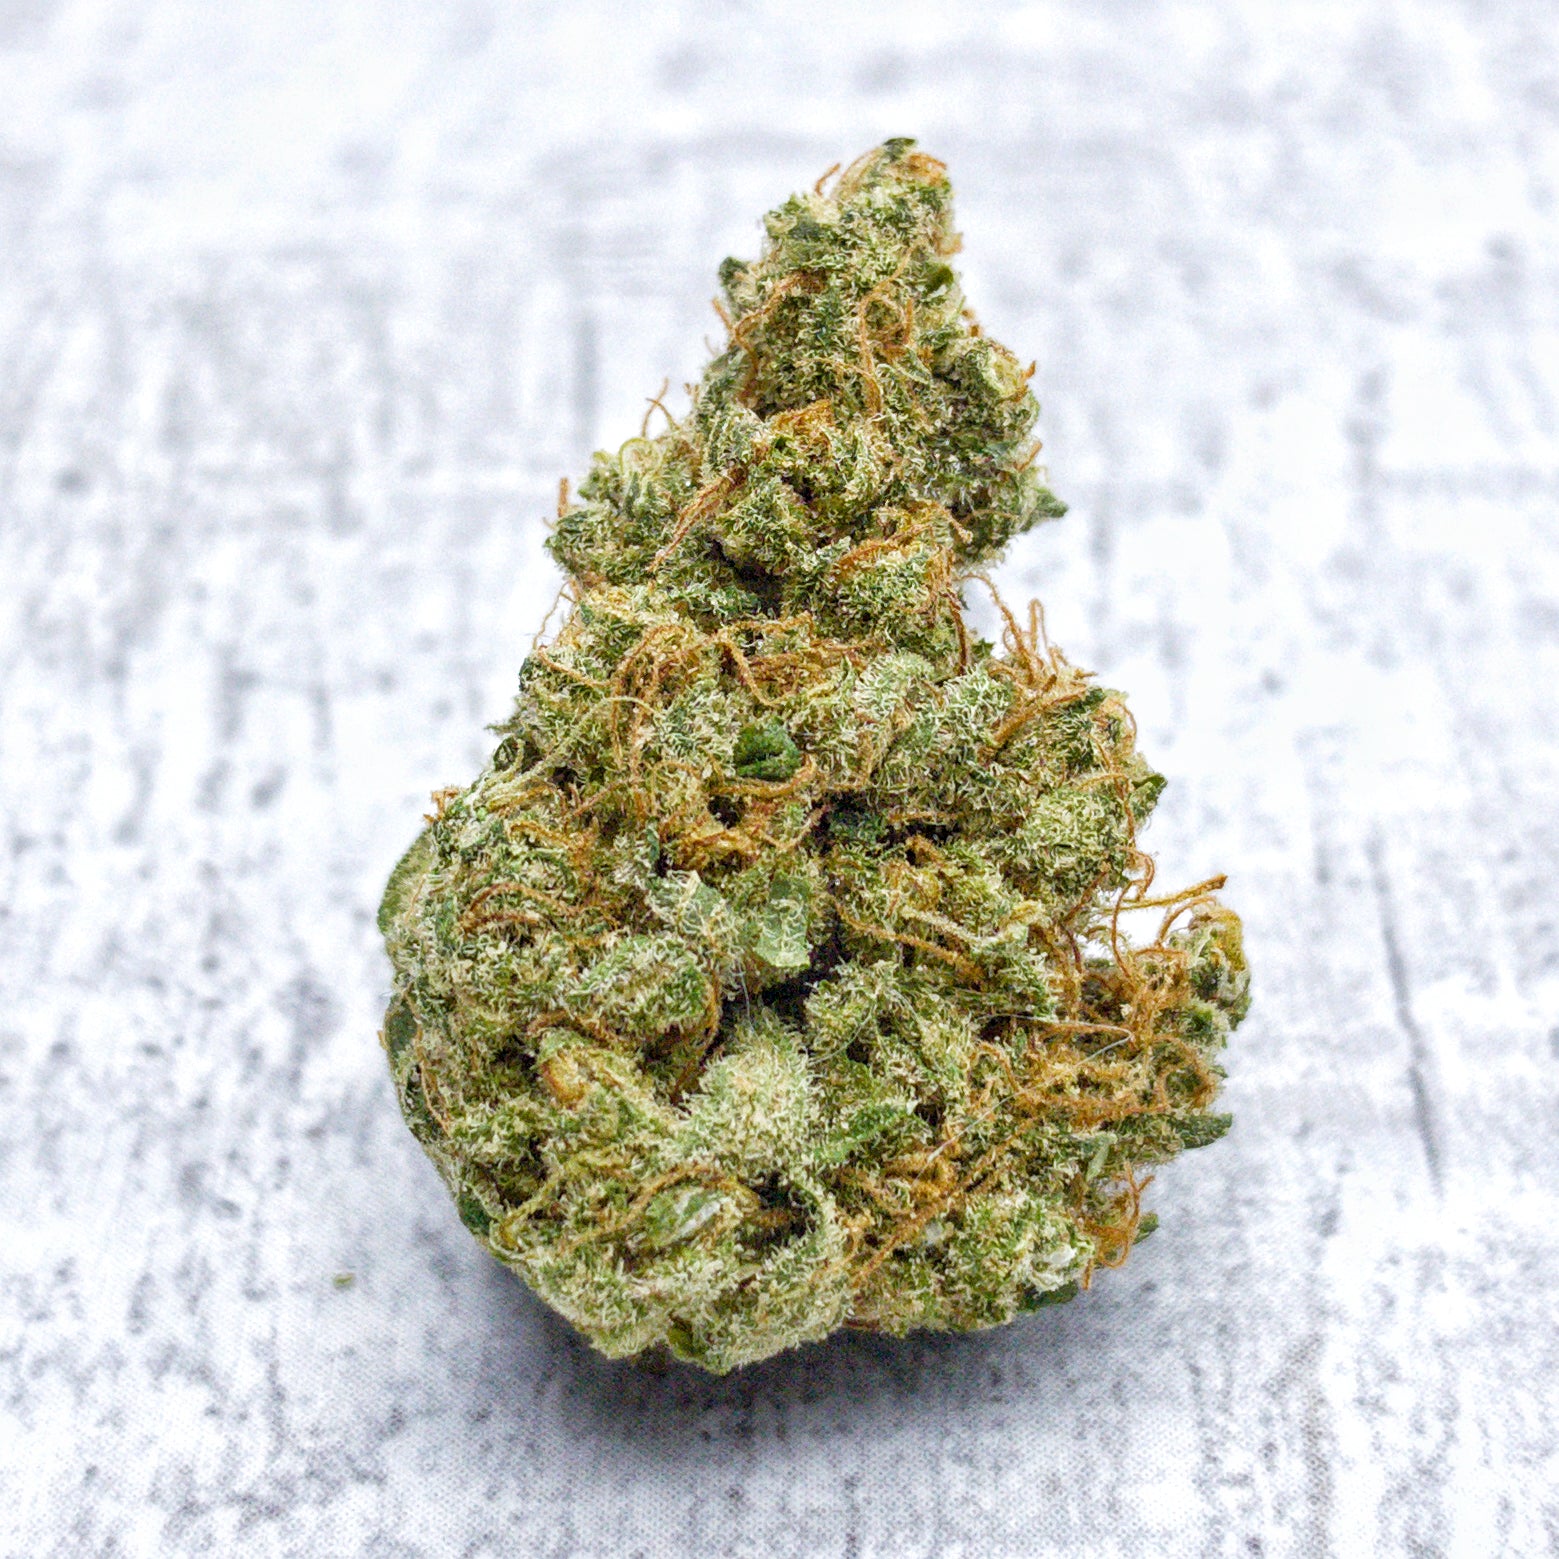 BackWoodz Hemp Flower and Cartel Cannabis - Indoor Hydroponic